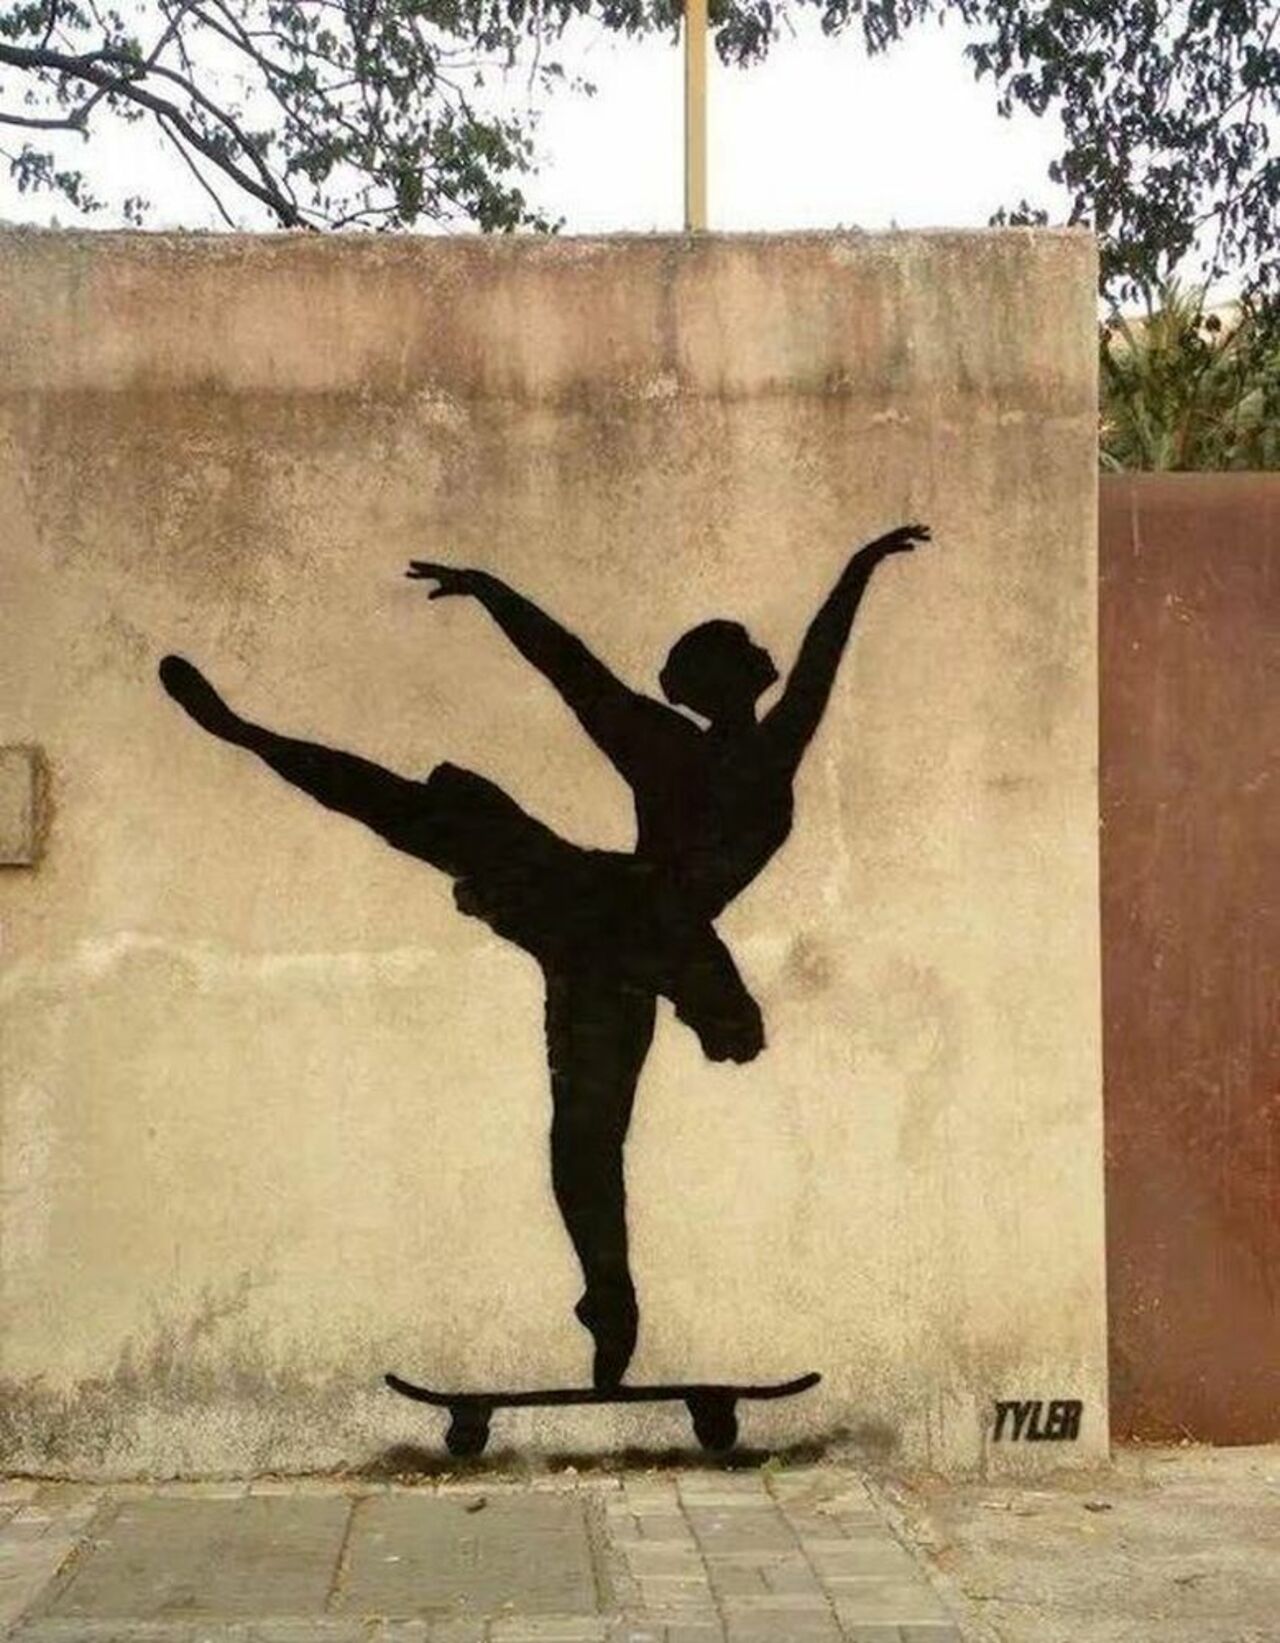 #StreetartSaturday Dancer shadow #Stencil #StreetArt by Tyler. https://t.co/JbJbRLFfGa